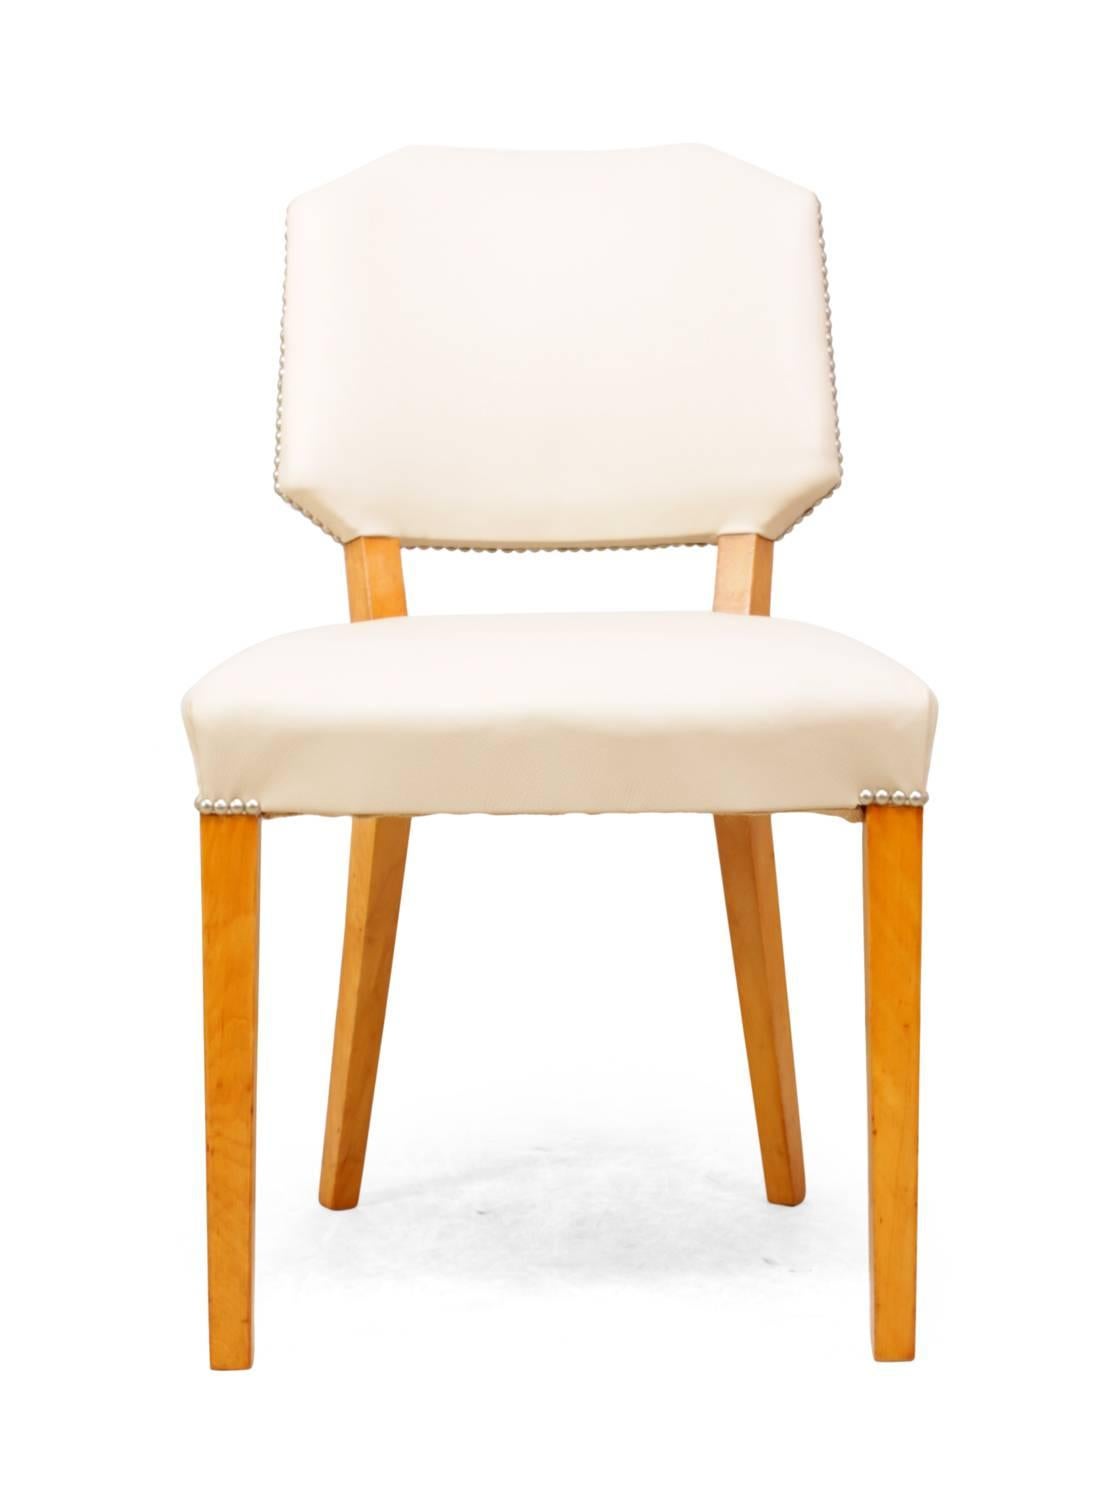 Birdseye Maple Set of Six Art Deco Dining Chairs